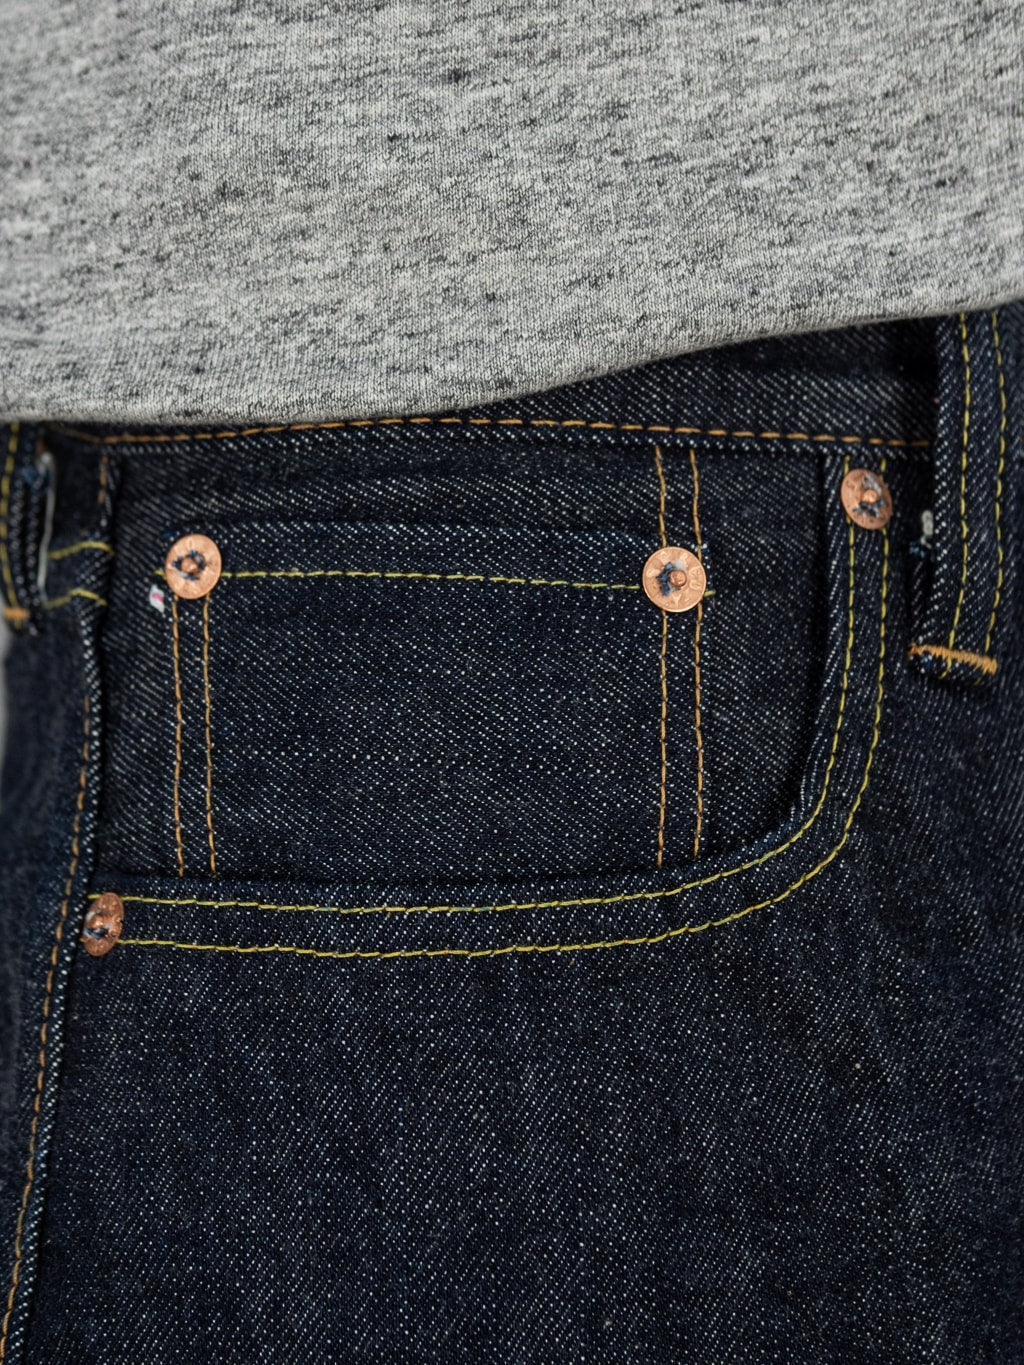 sugar cane SC41947 14.25oz denim 1947 model regular straight jeans coin pocket